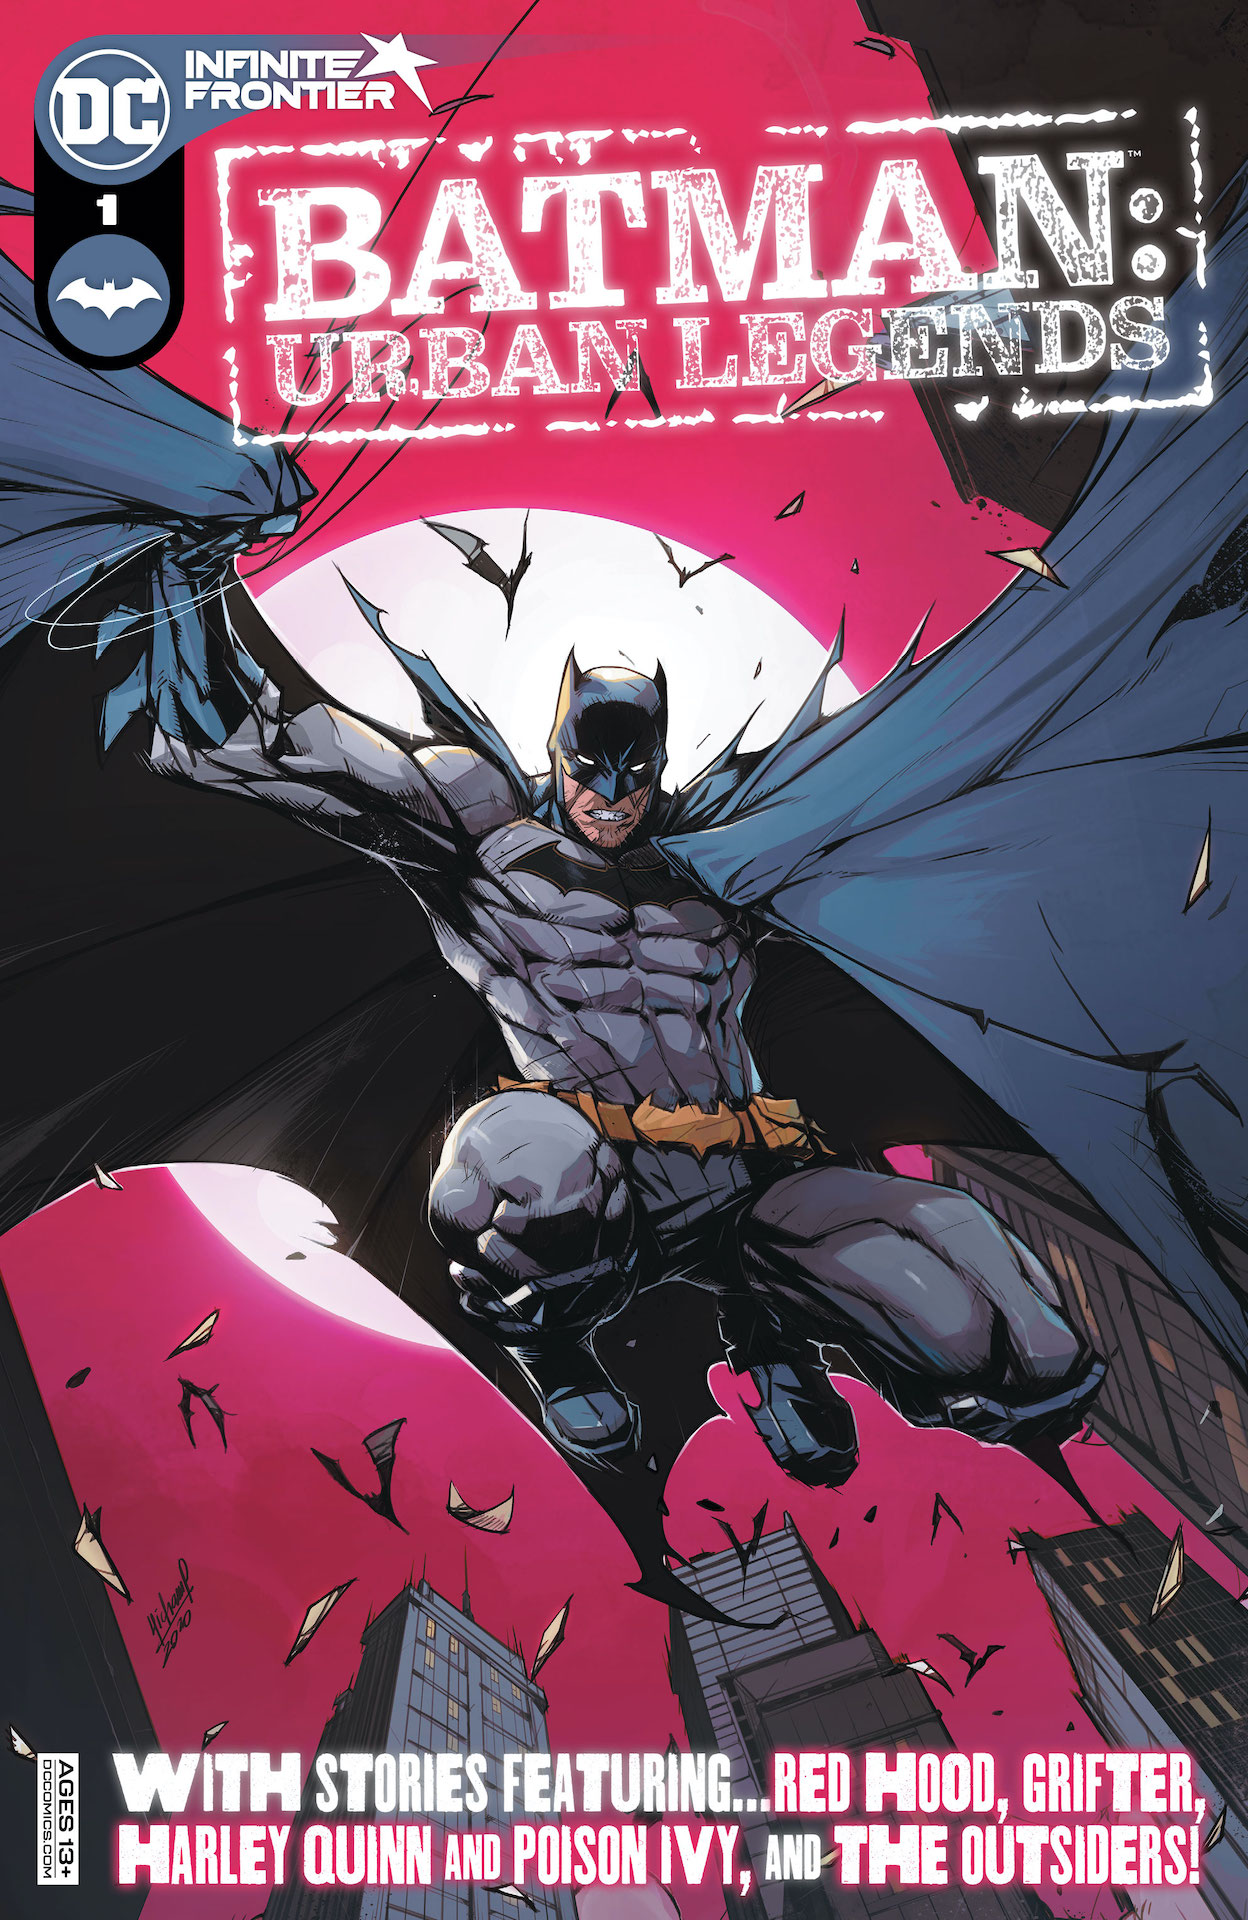 DC Preview: Batman: Urban Legends #1